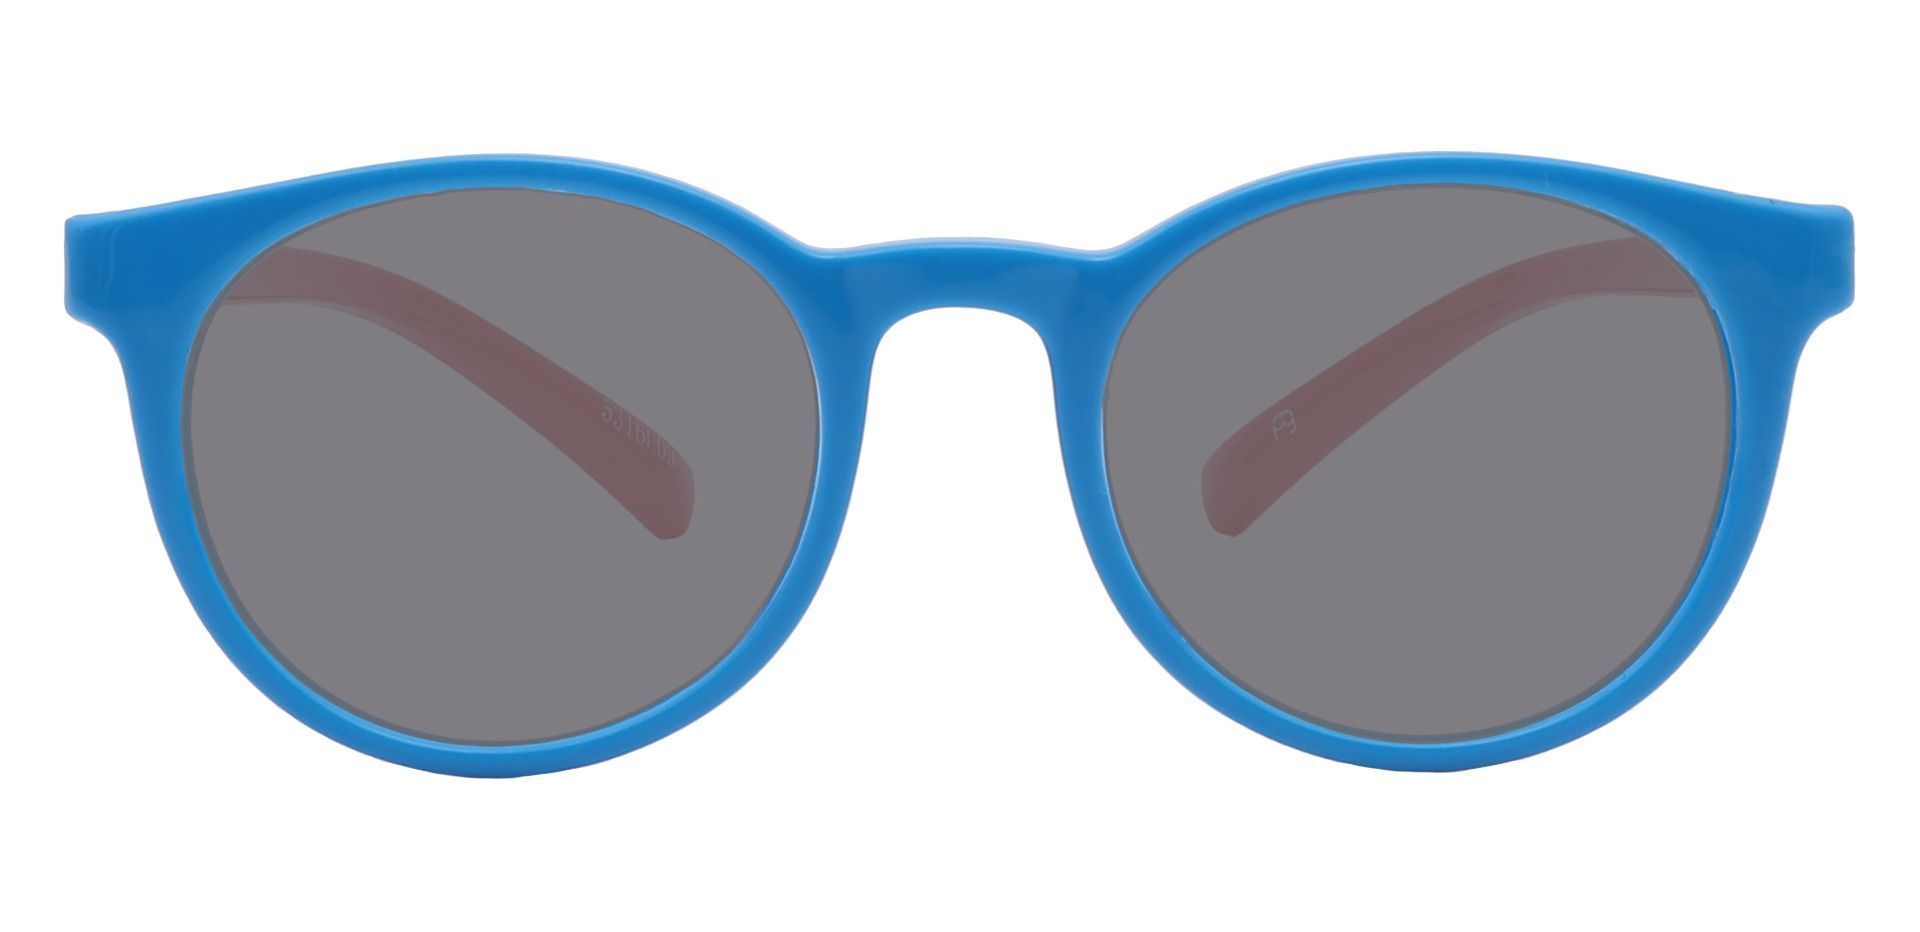 Bender Round Single Vision Sunglasses - Blue Frame With Gray Lenses